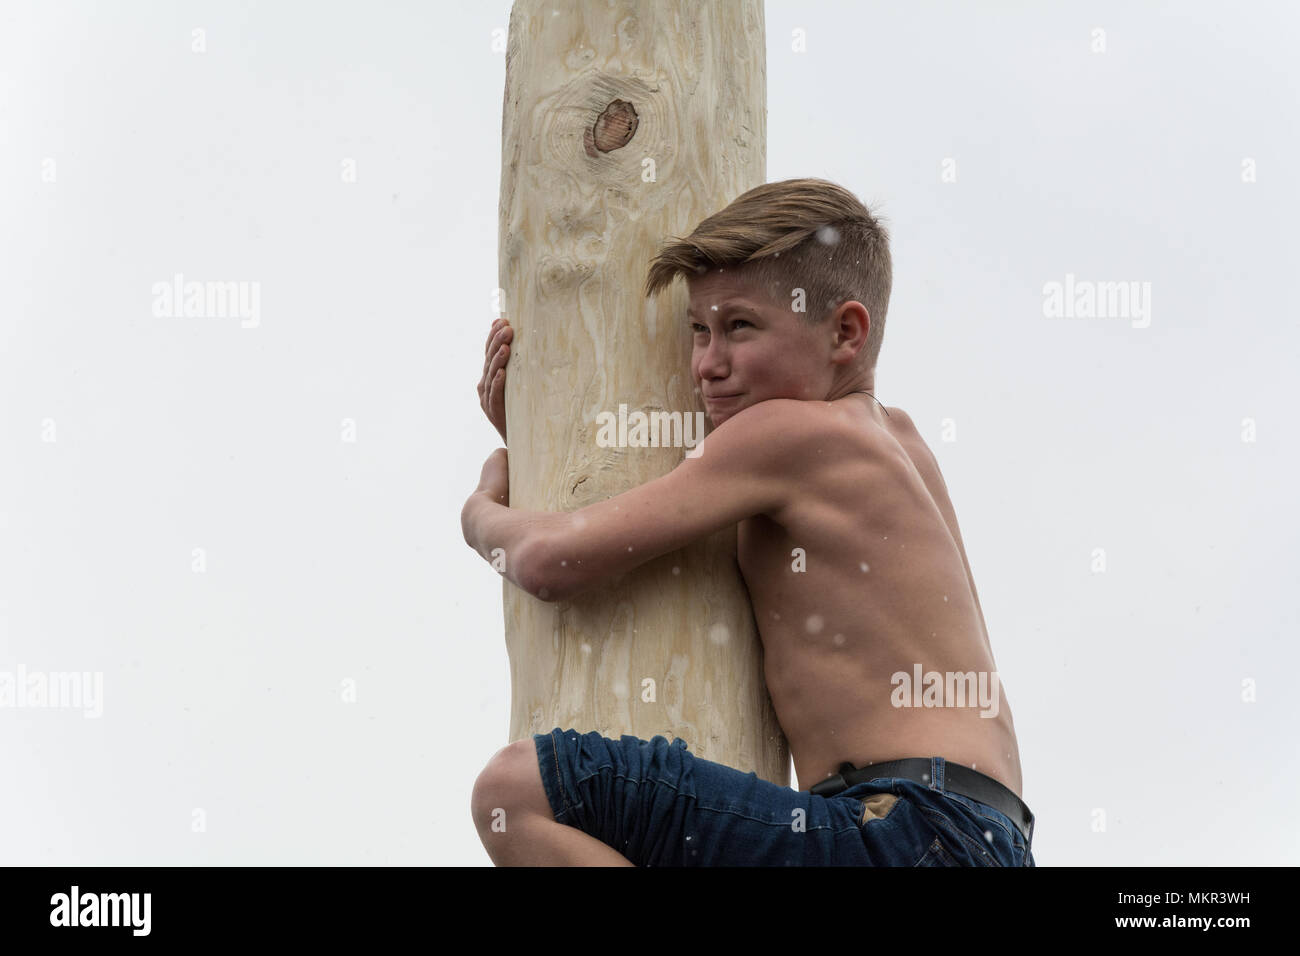 TIRASPOL, MOLDOVA-FEBRUARY 18, 2018: Boy climbing on a wooden pole for the prize. Slavonic folk pagan holiday Maslenitsa (Shrovetide) - a symbolic mee Stock Photo